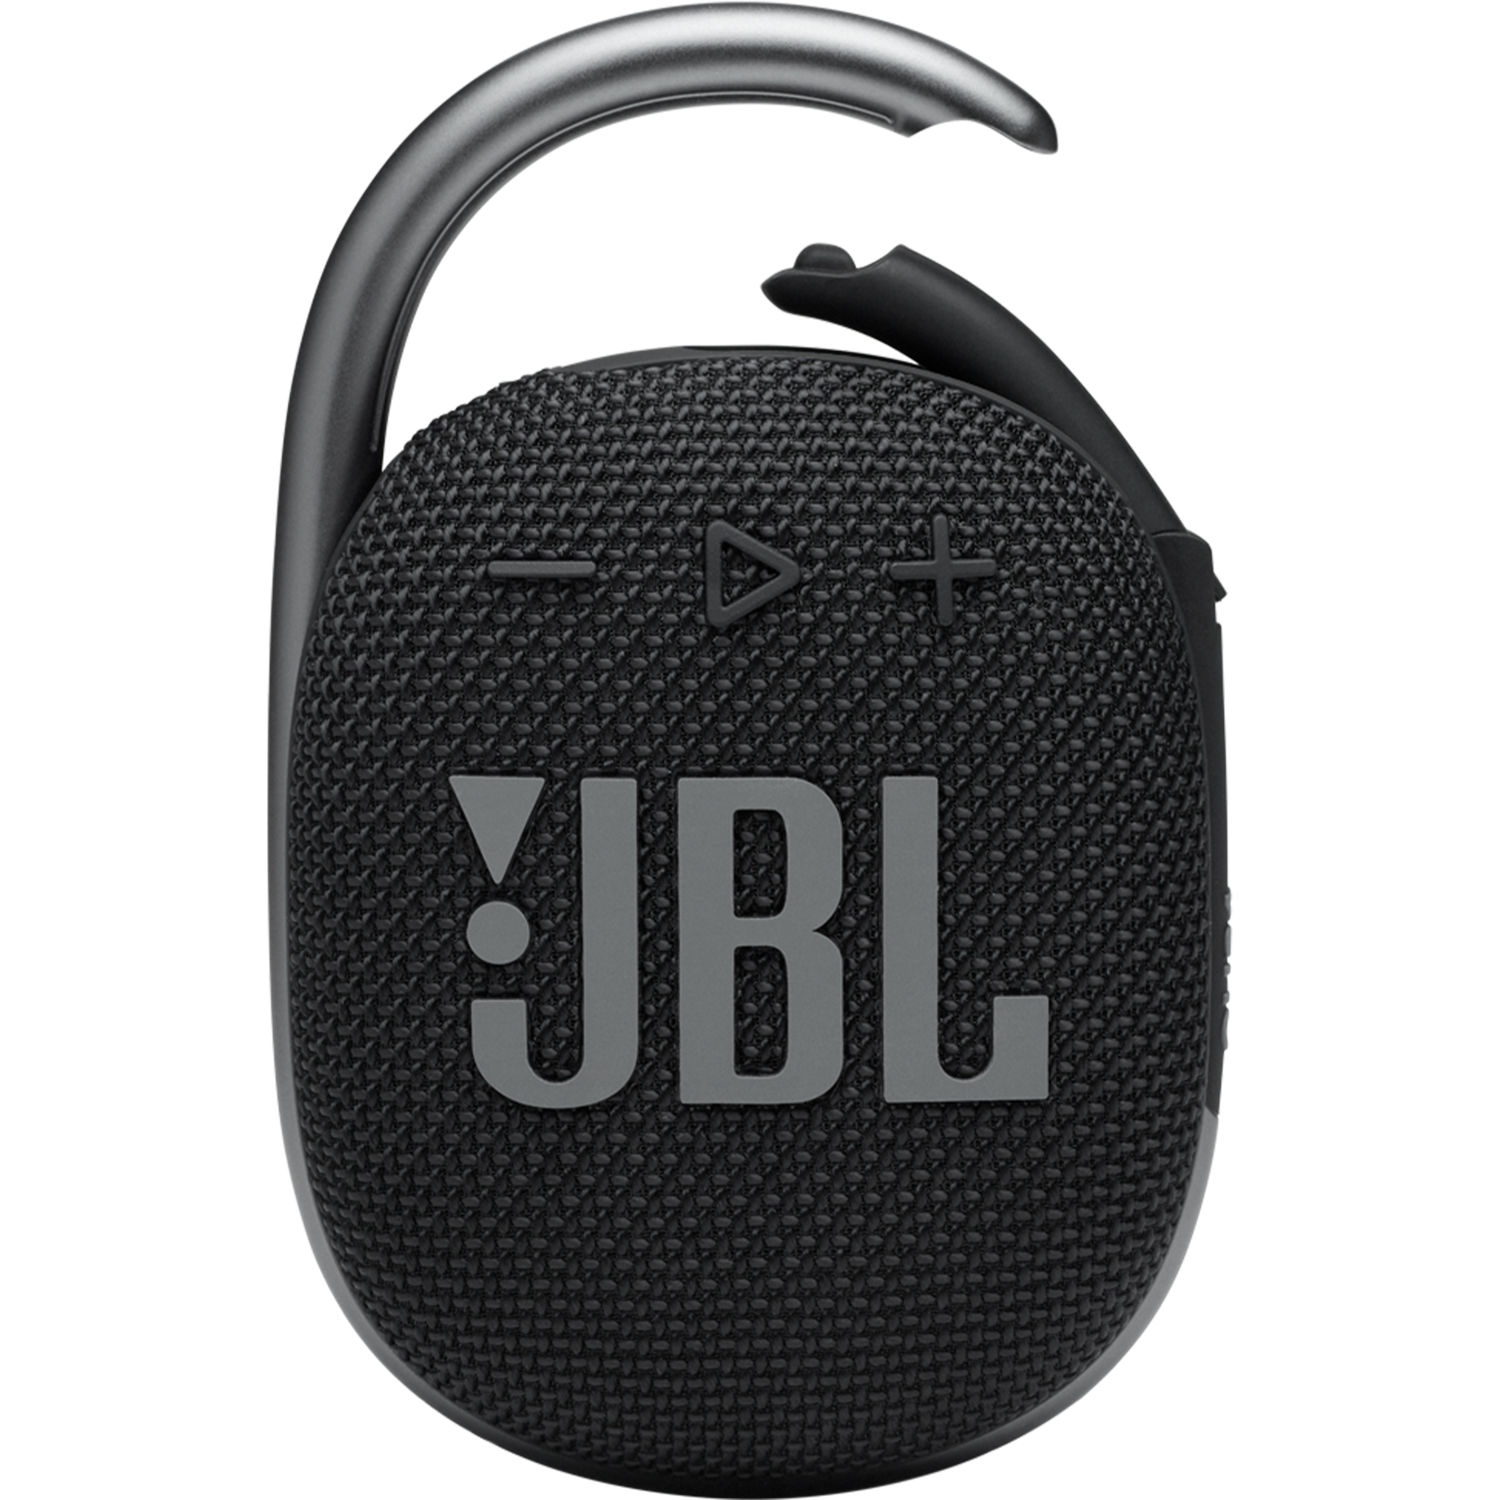 JBL Clip 4 Portable Bluetooth Speaker - Black Only $19.99